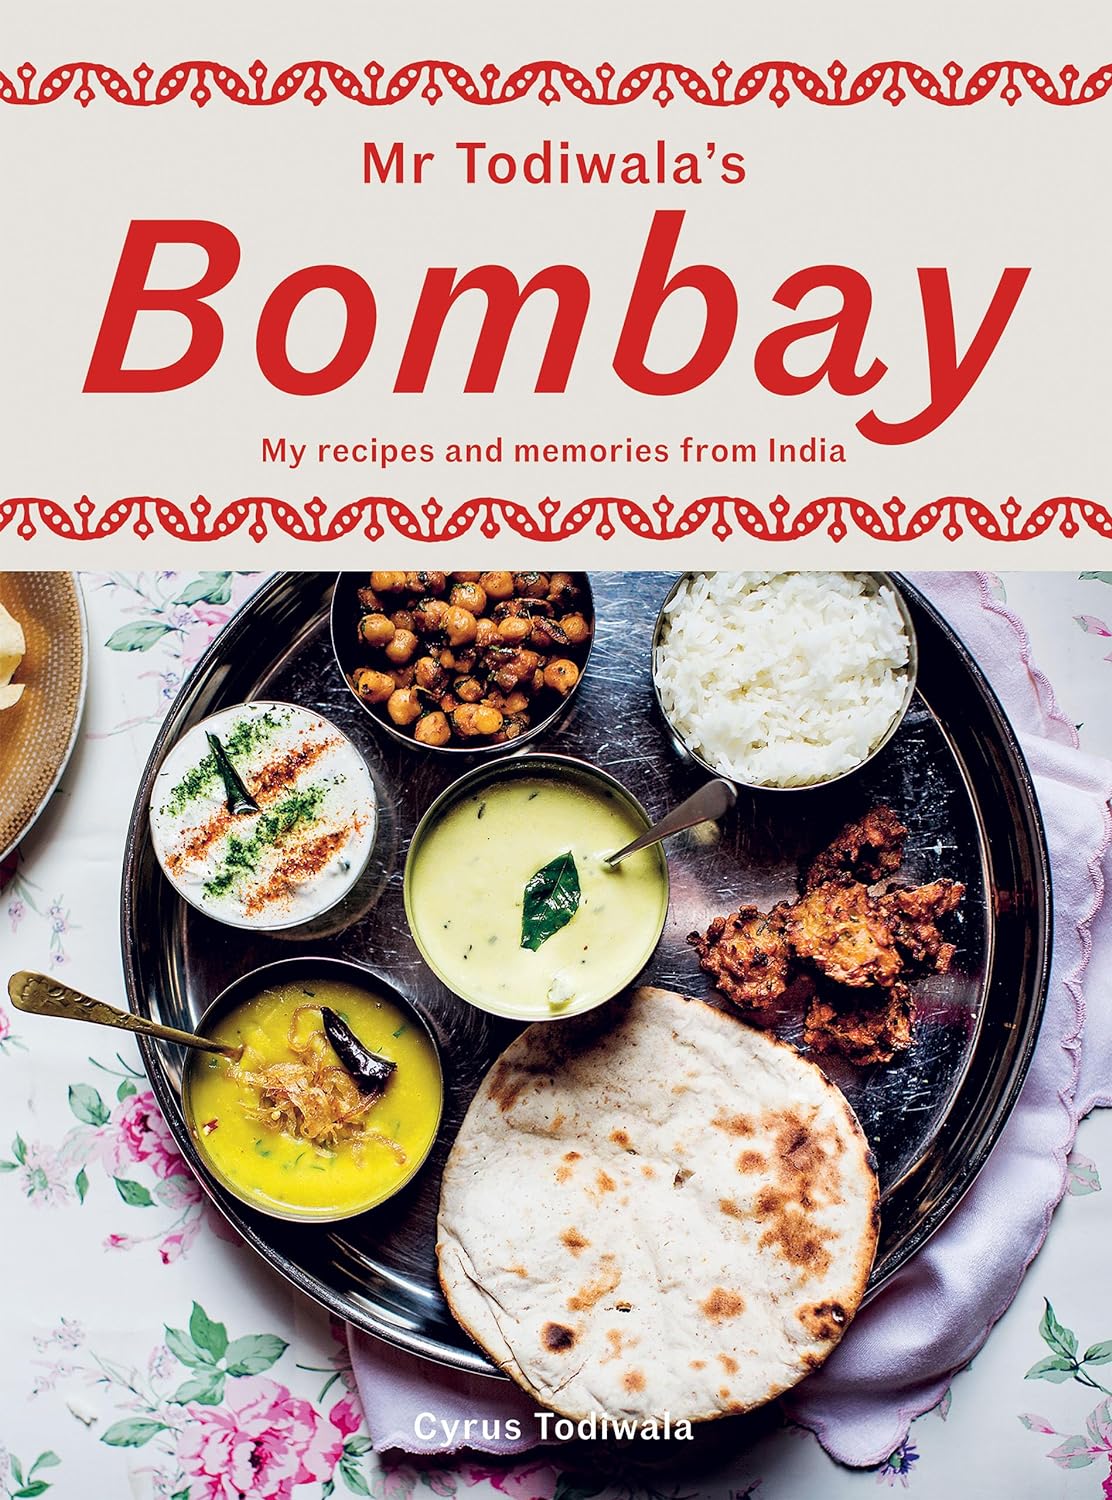 Mr. Todiwala's Bombay: My Recipes and Memories from India (Cyrus Todiwala)